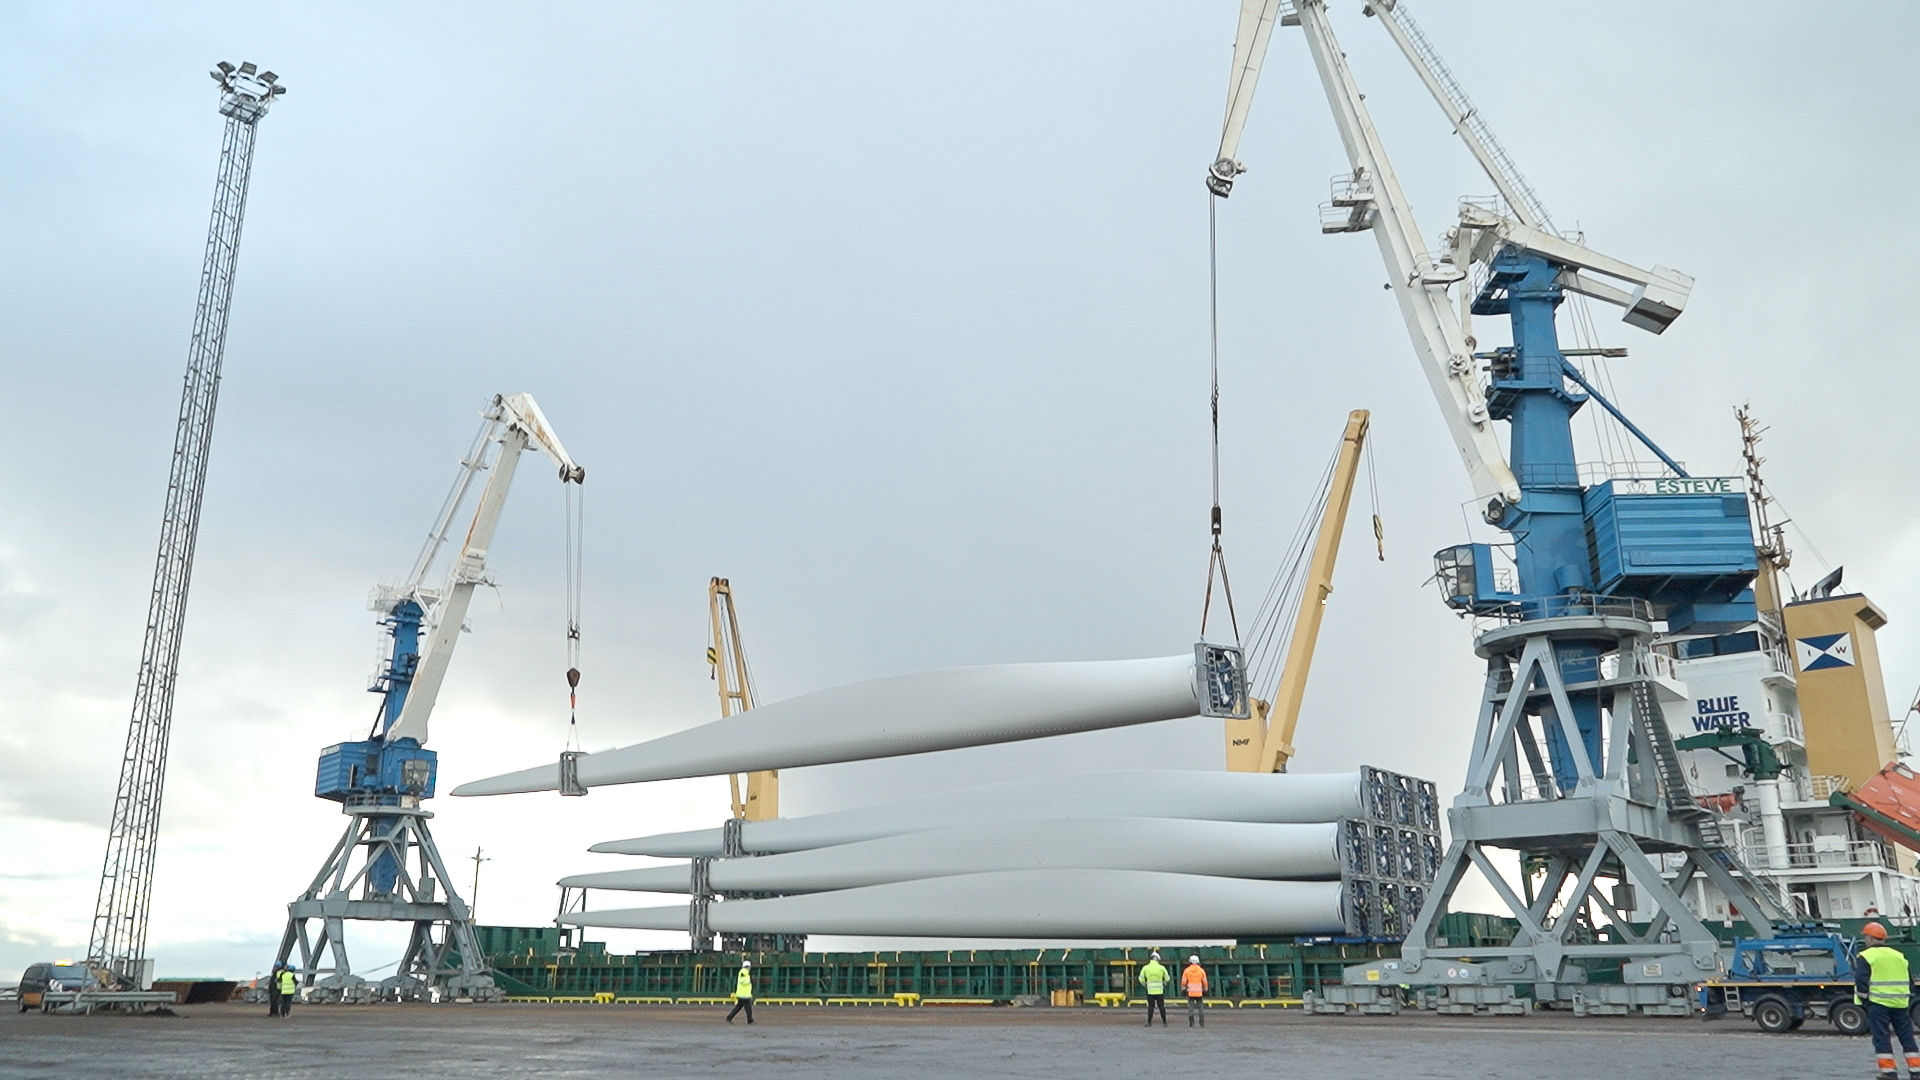 Saarde wind project components arrive at Paldiski port